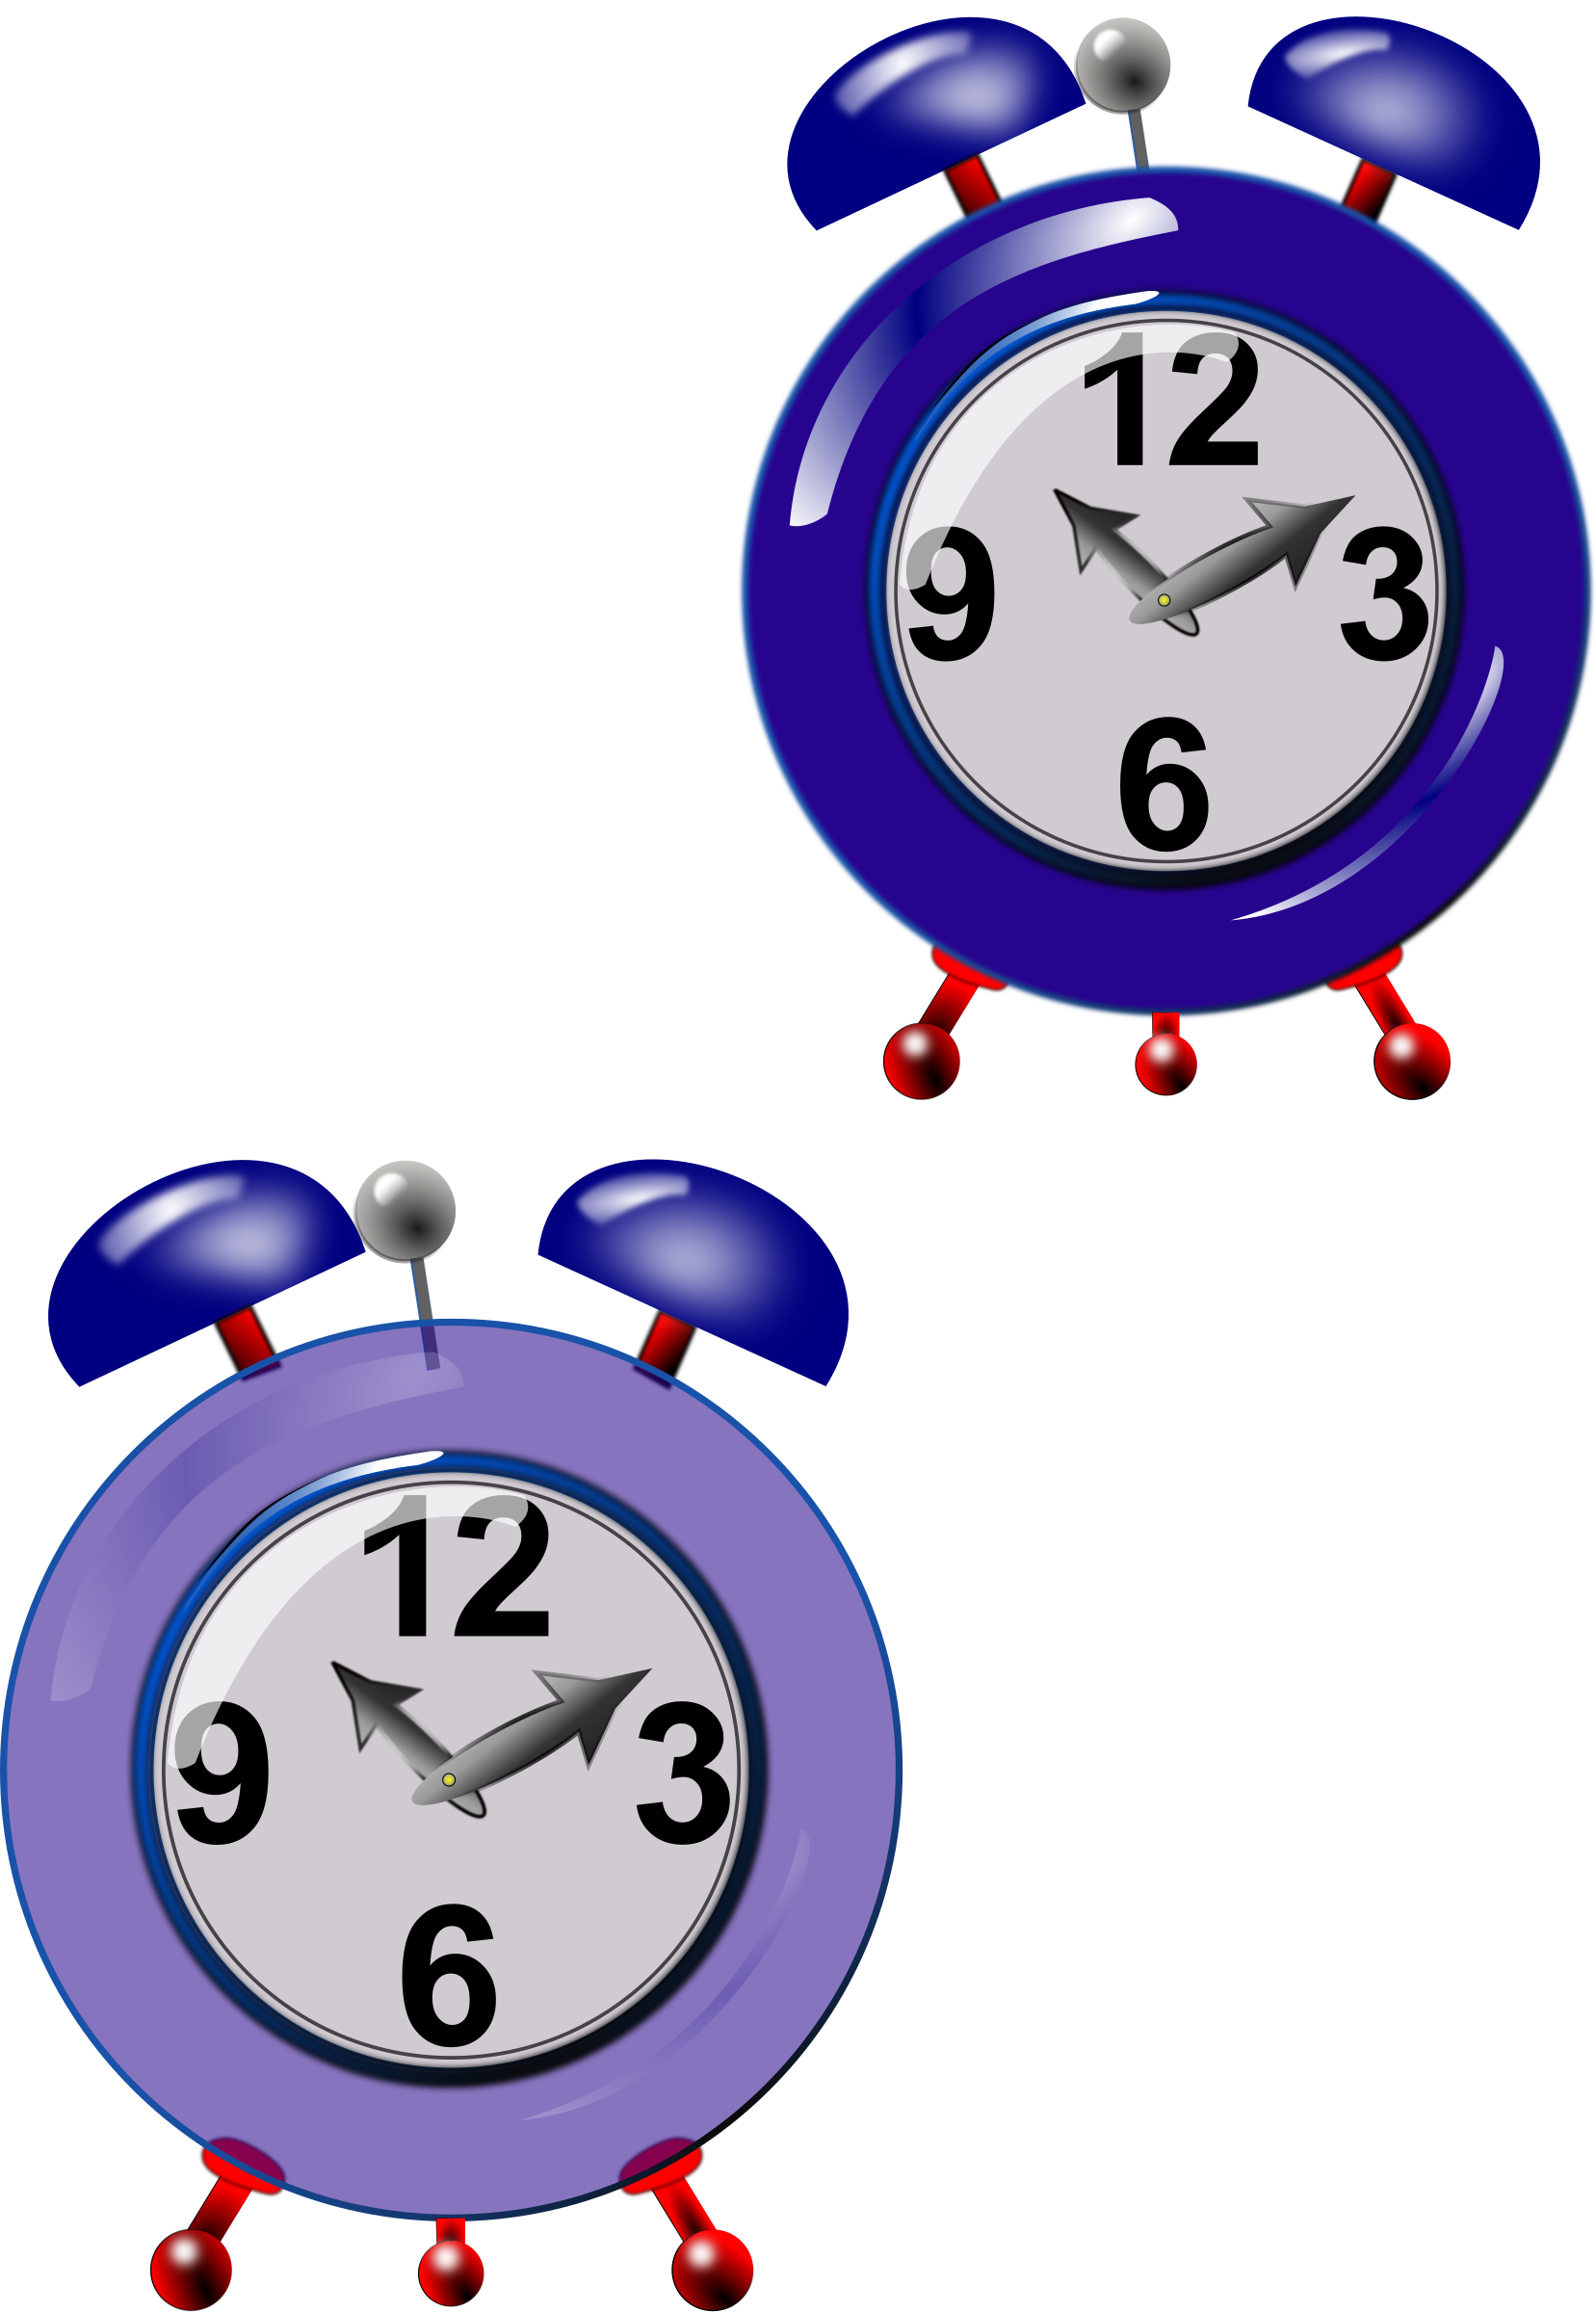 Alarm Clocks Digital Clock Clip Art - Alarm Clocks Digital Clock Clip Art (1657x2400)